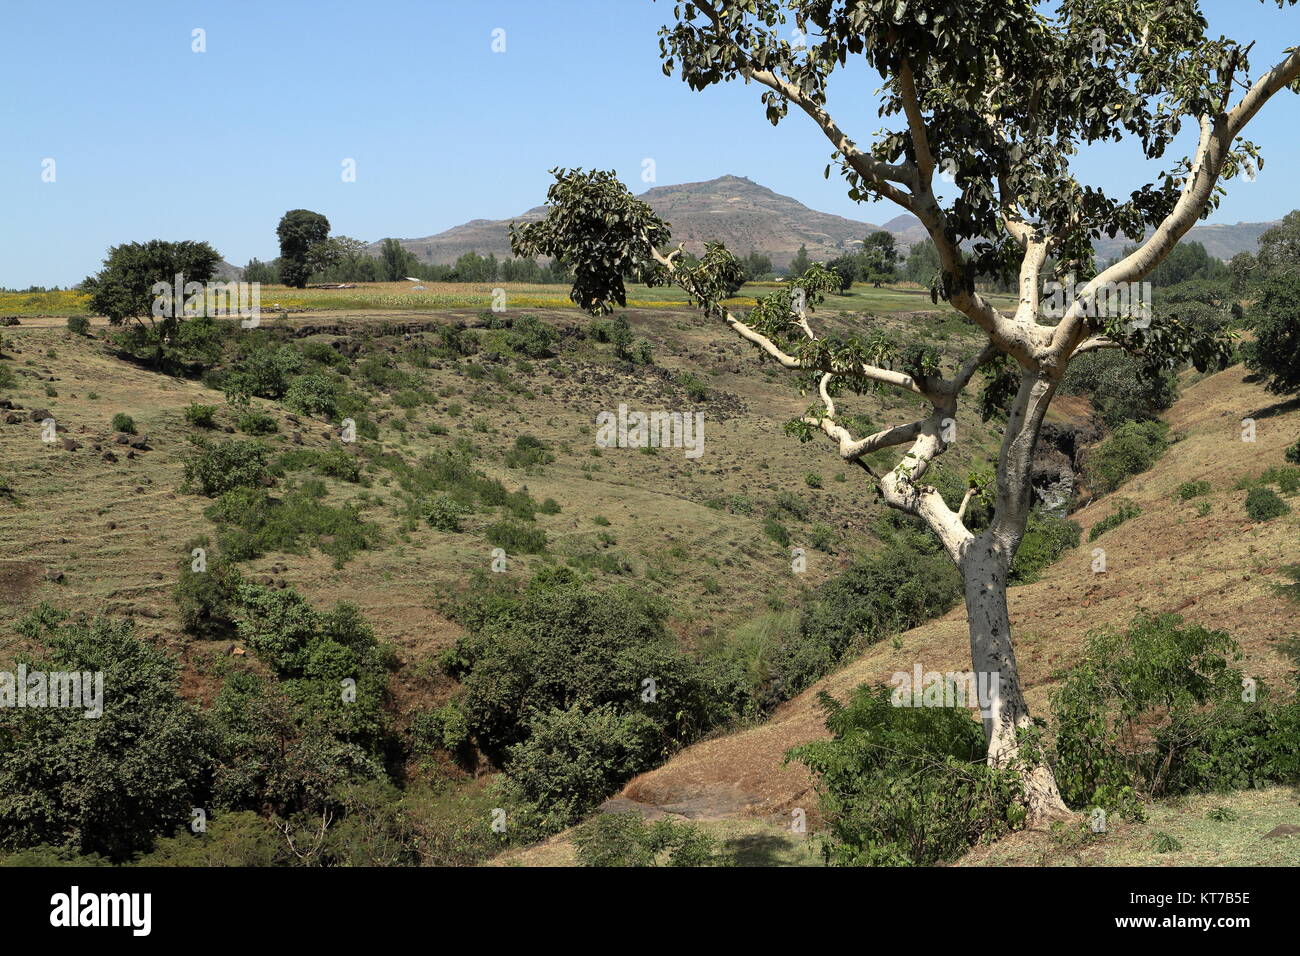 landscape in ethiopia Stock Photo